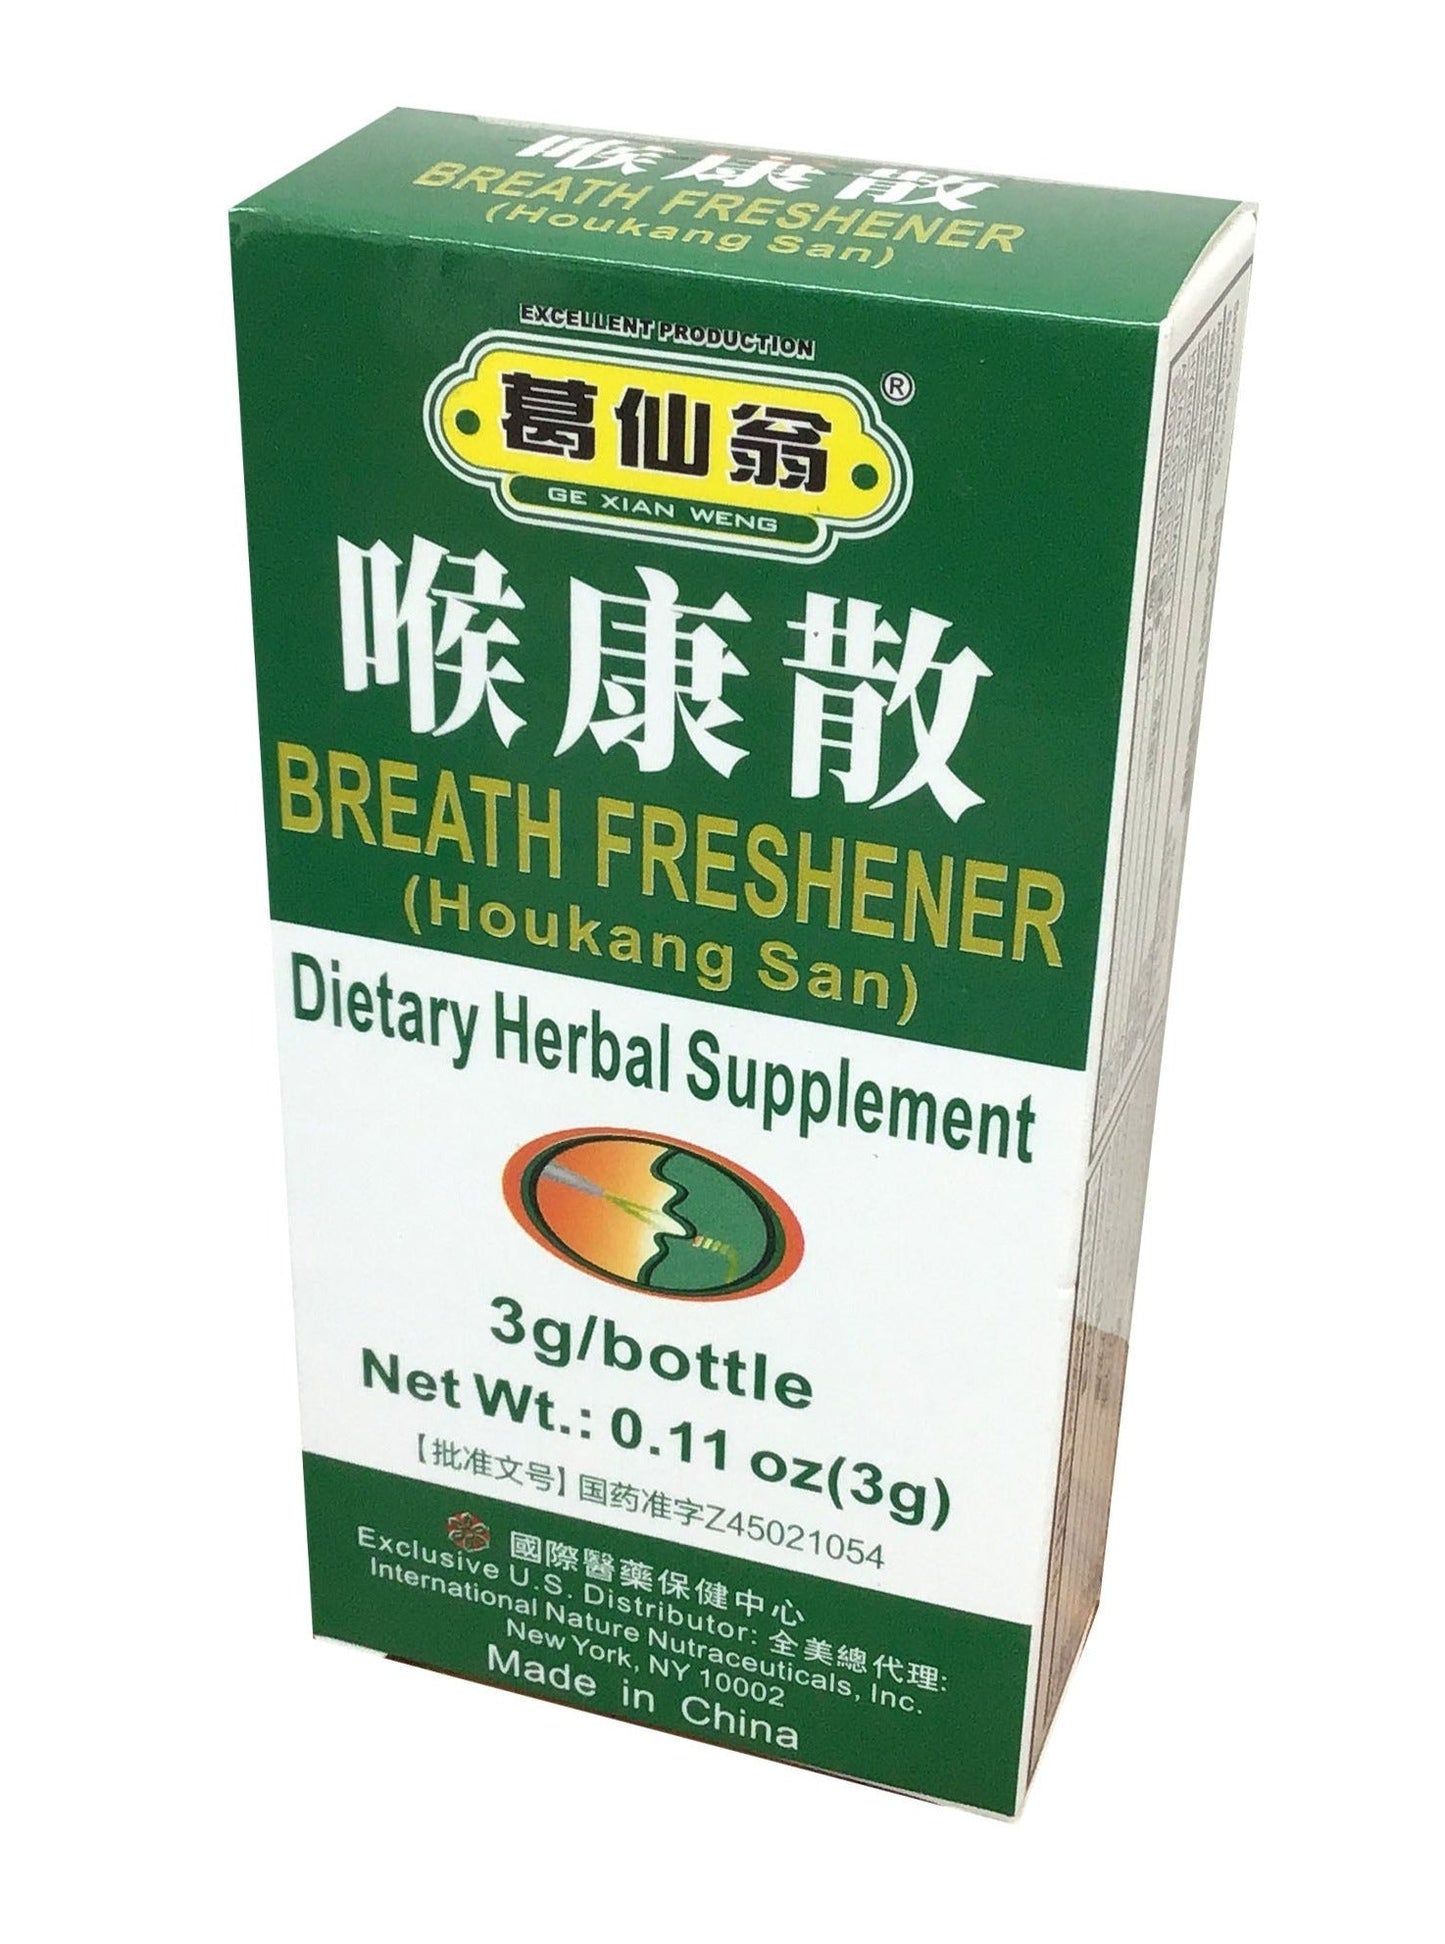 Breath Freshener 葛仙翁 喉康散